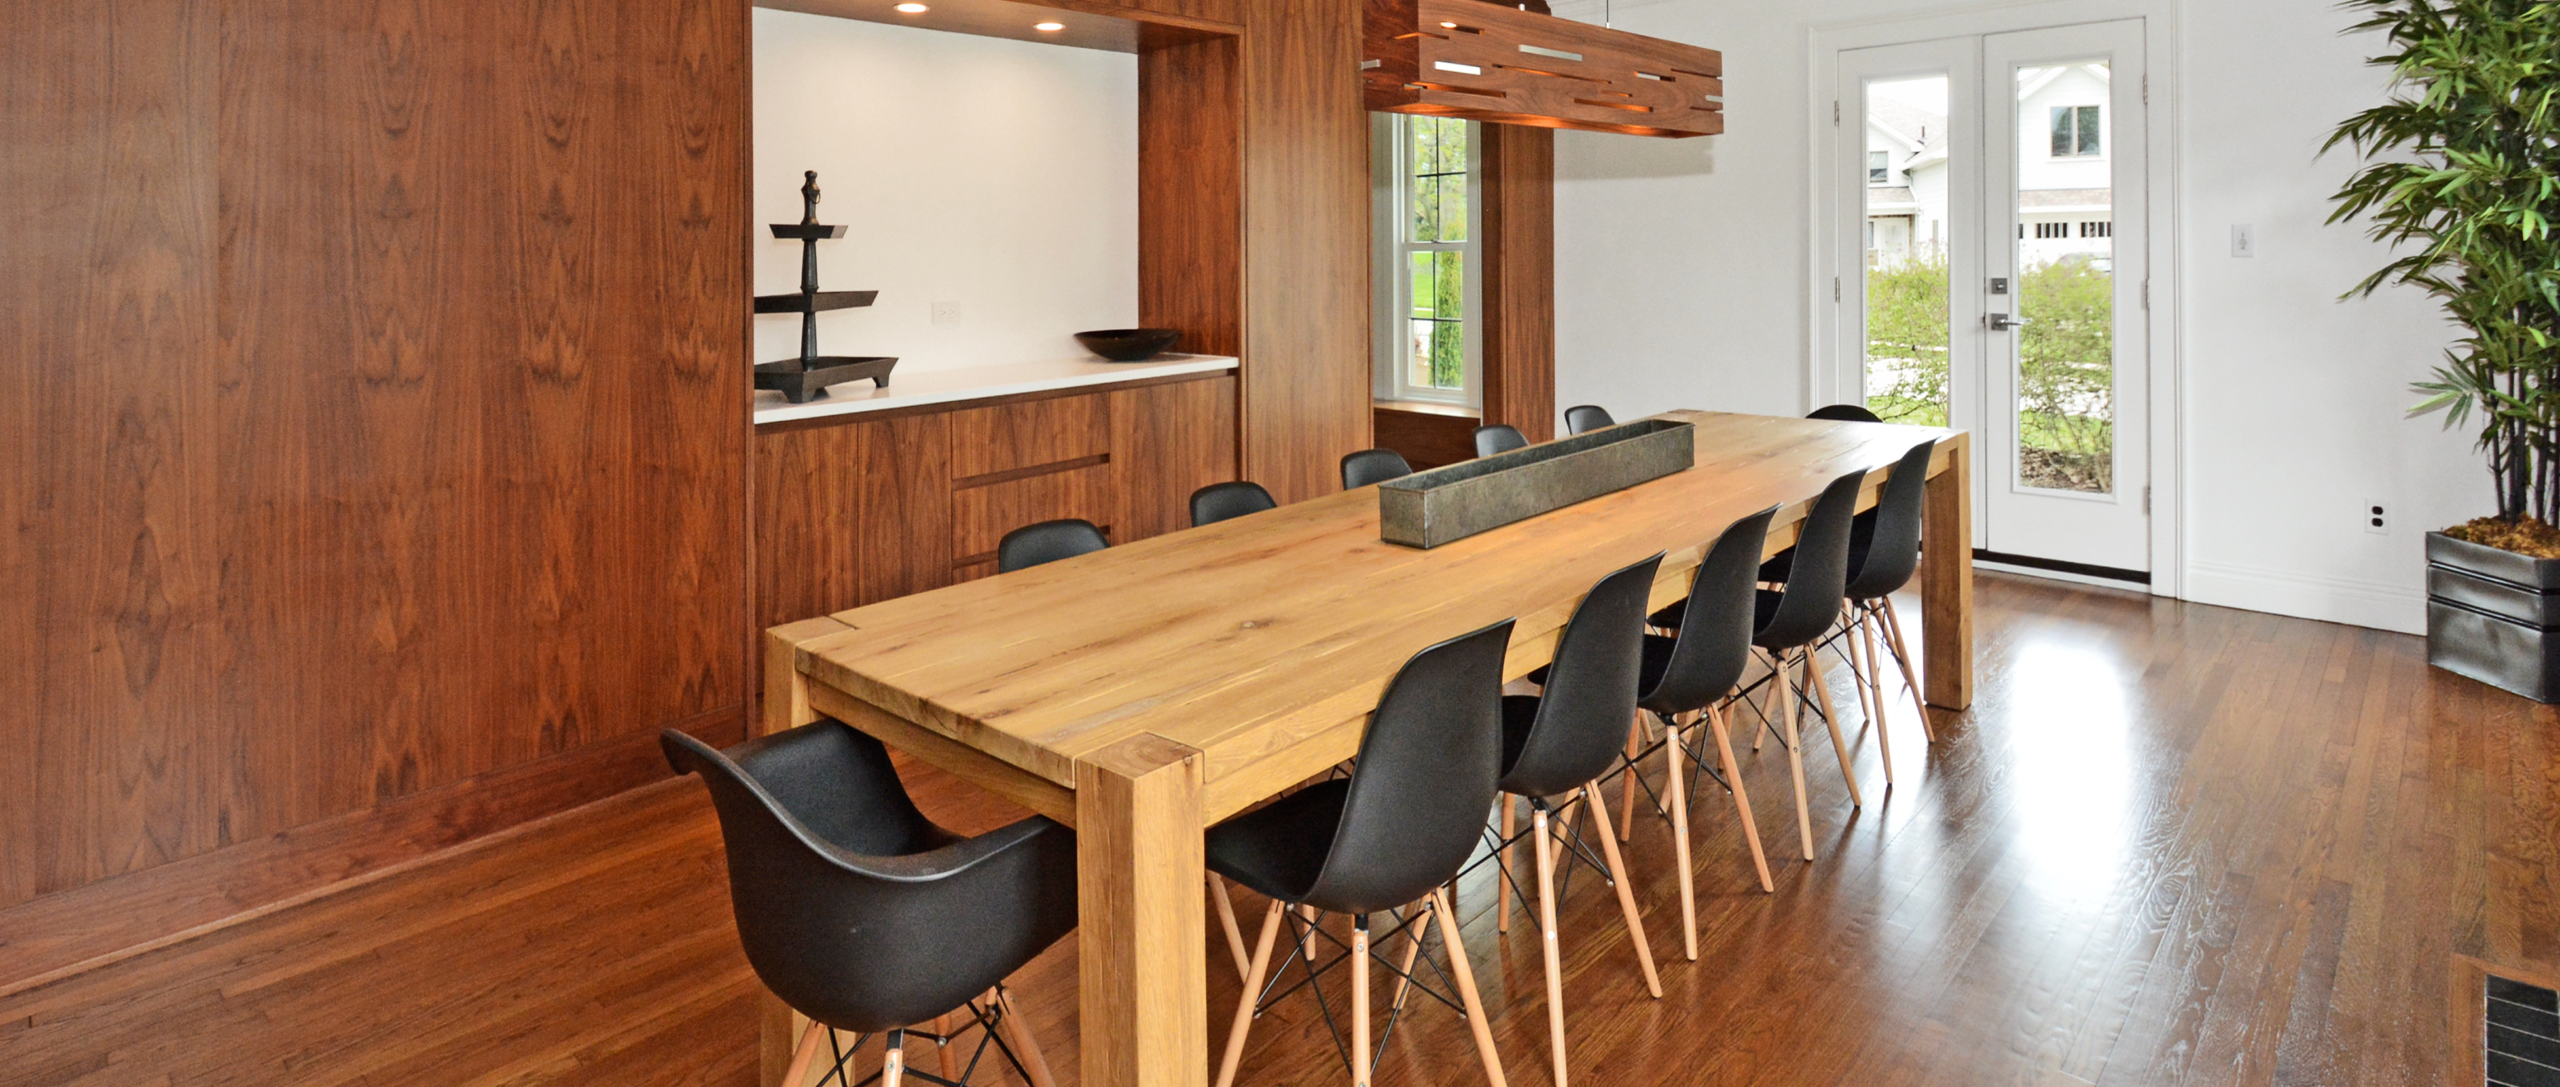 evergreen-portfolio-kensington-modern-revival-interior-DR-dining-room-wide-BANNER